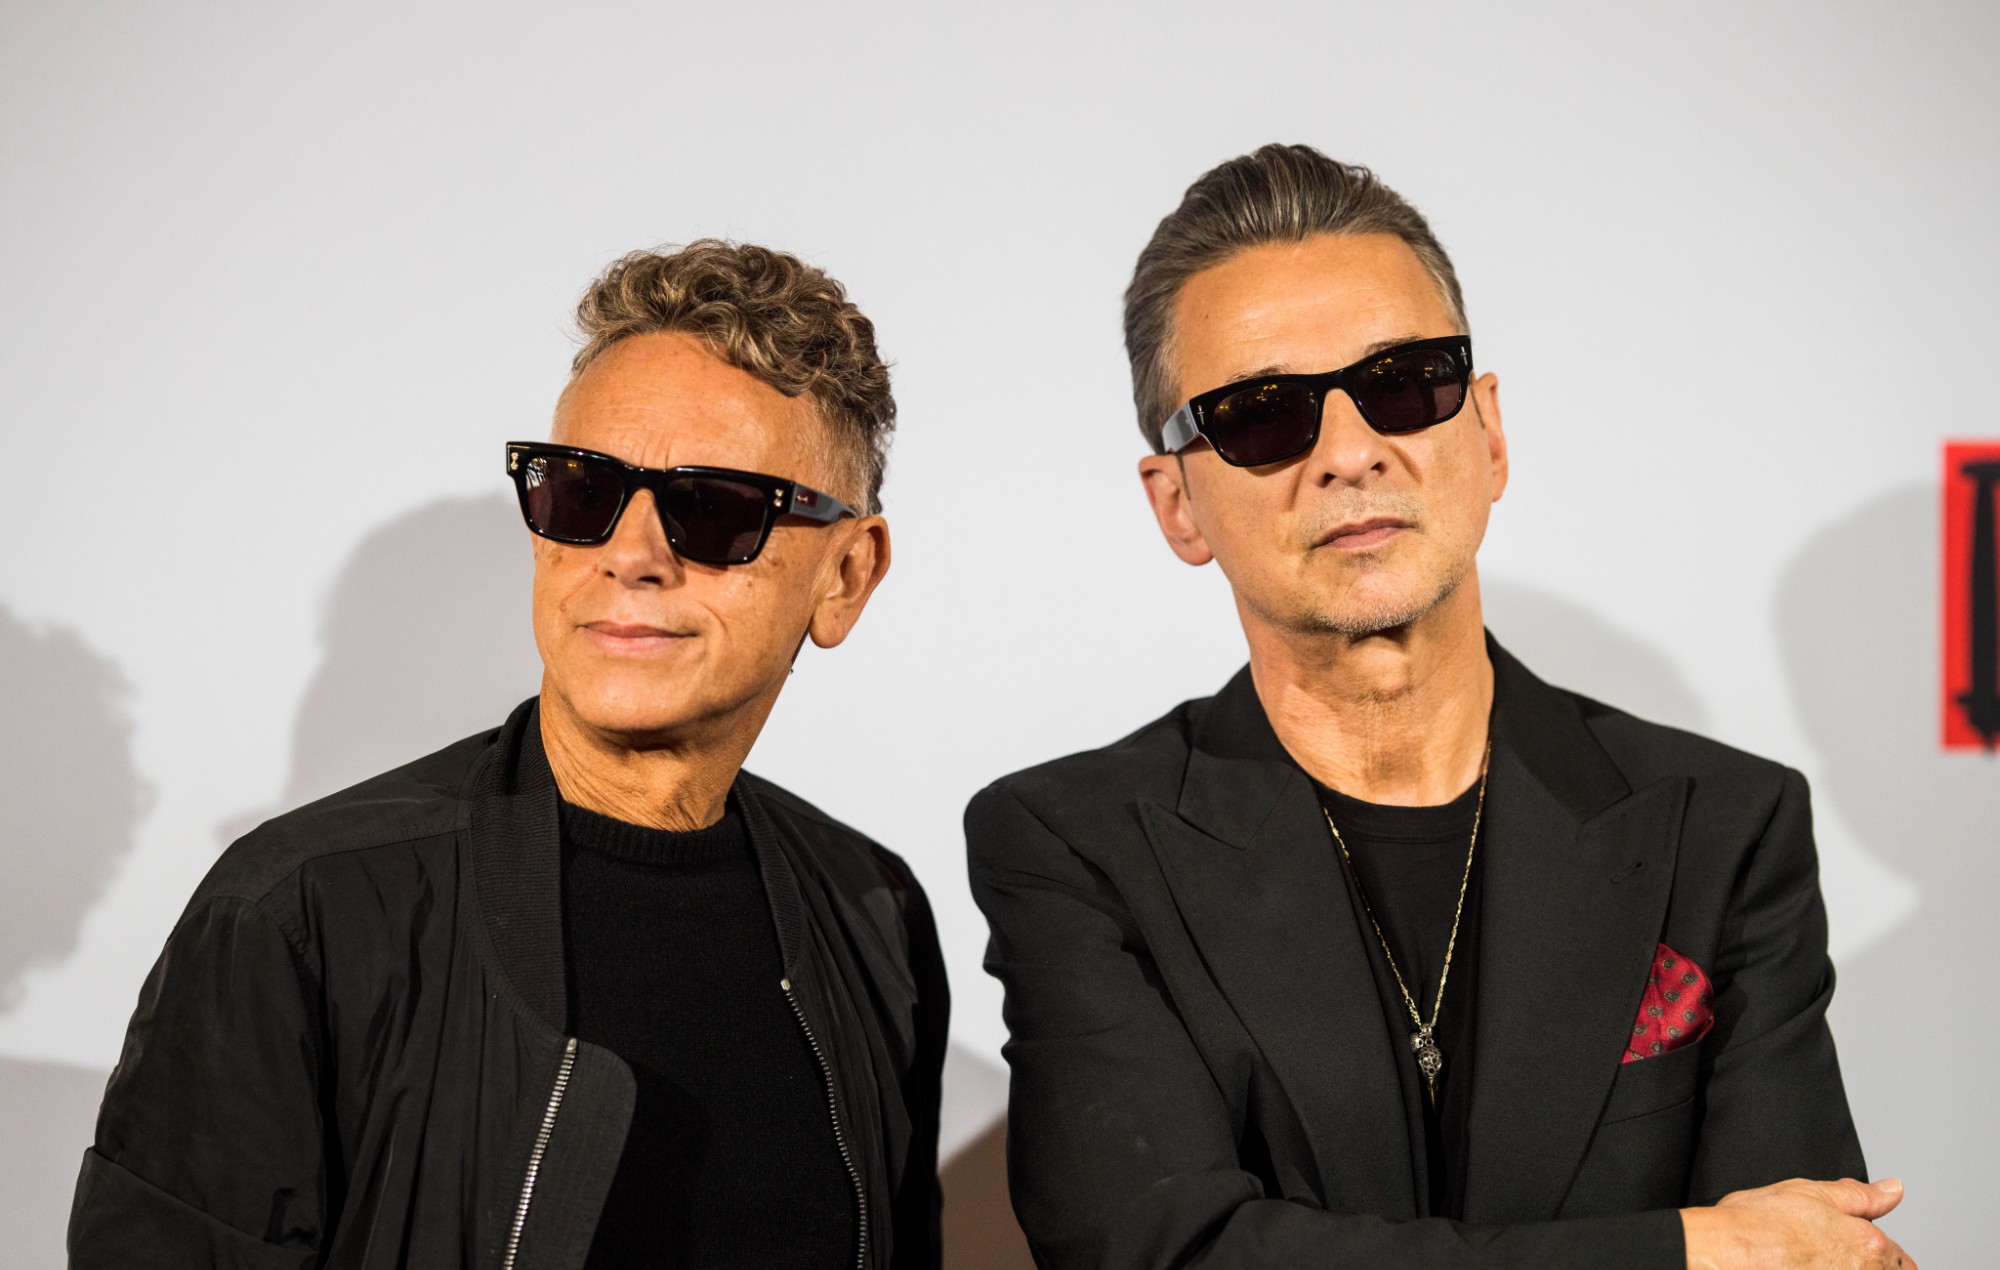 Depeche Mode revela data do próximo single, 'Ghosts Again' / Depeche Mode reveal date of upcoming new single, ‘Ghosts Again’